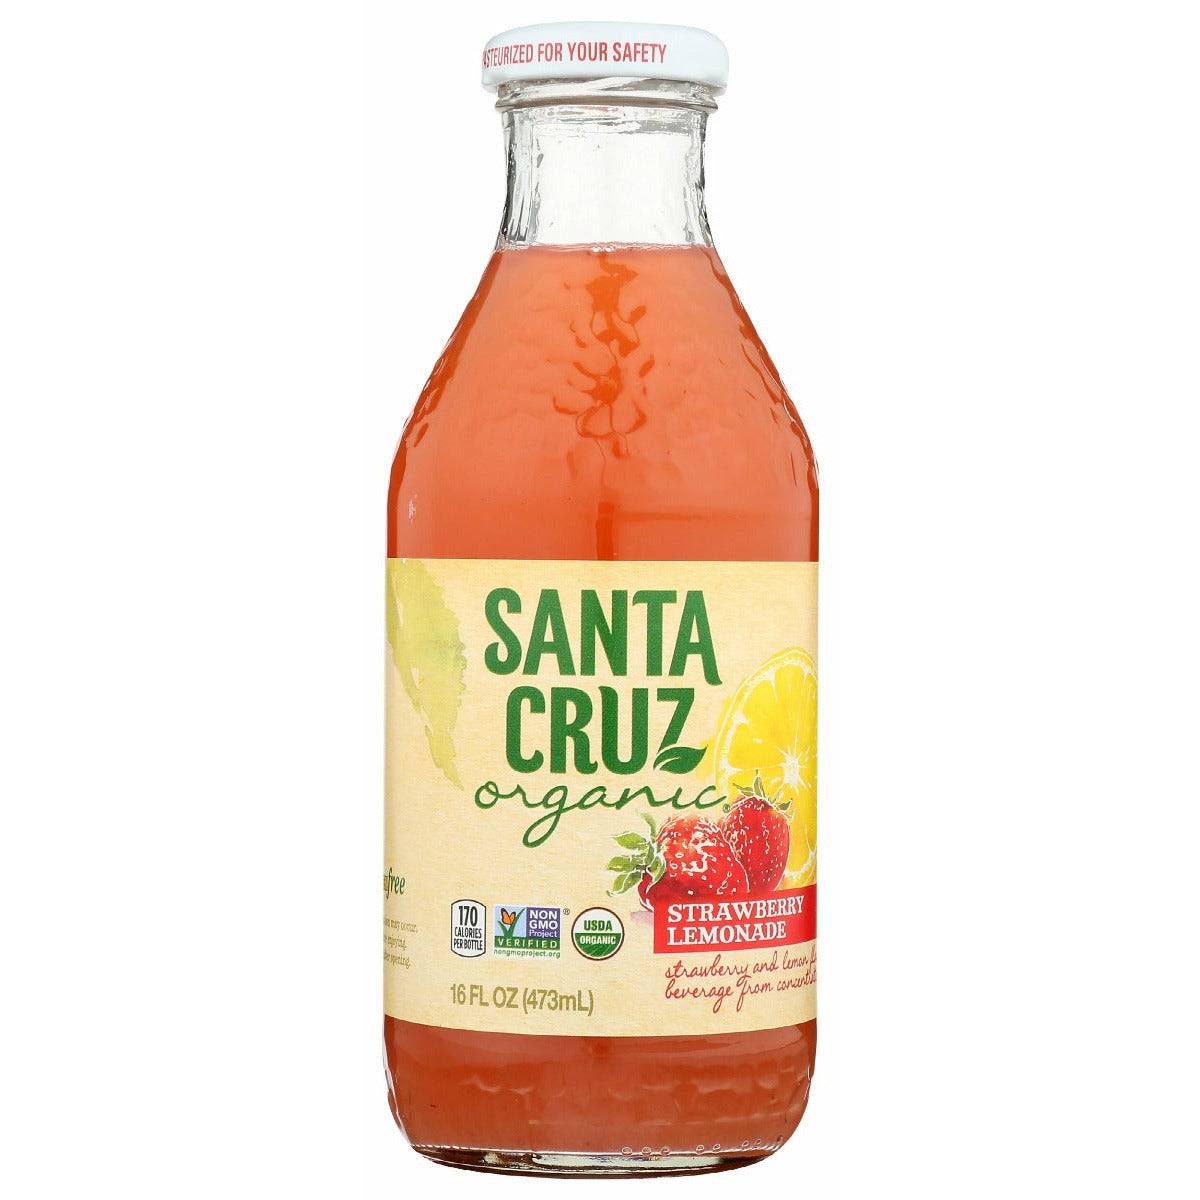 Santa Cruz Organic Strawberry Lemonade 16 fl oz